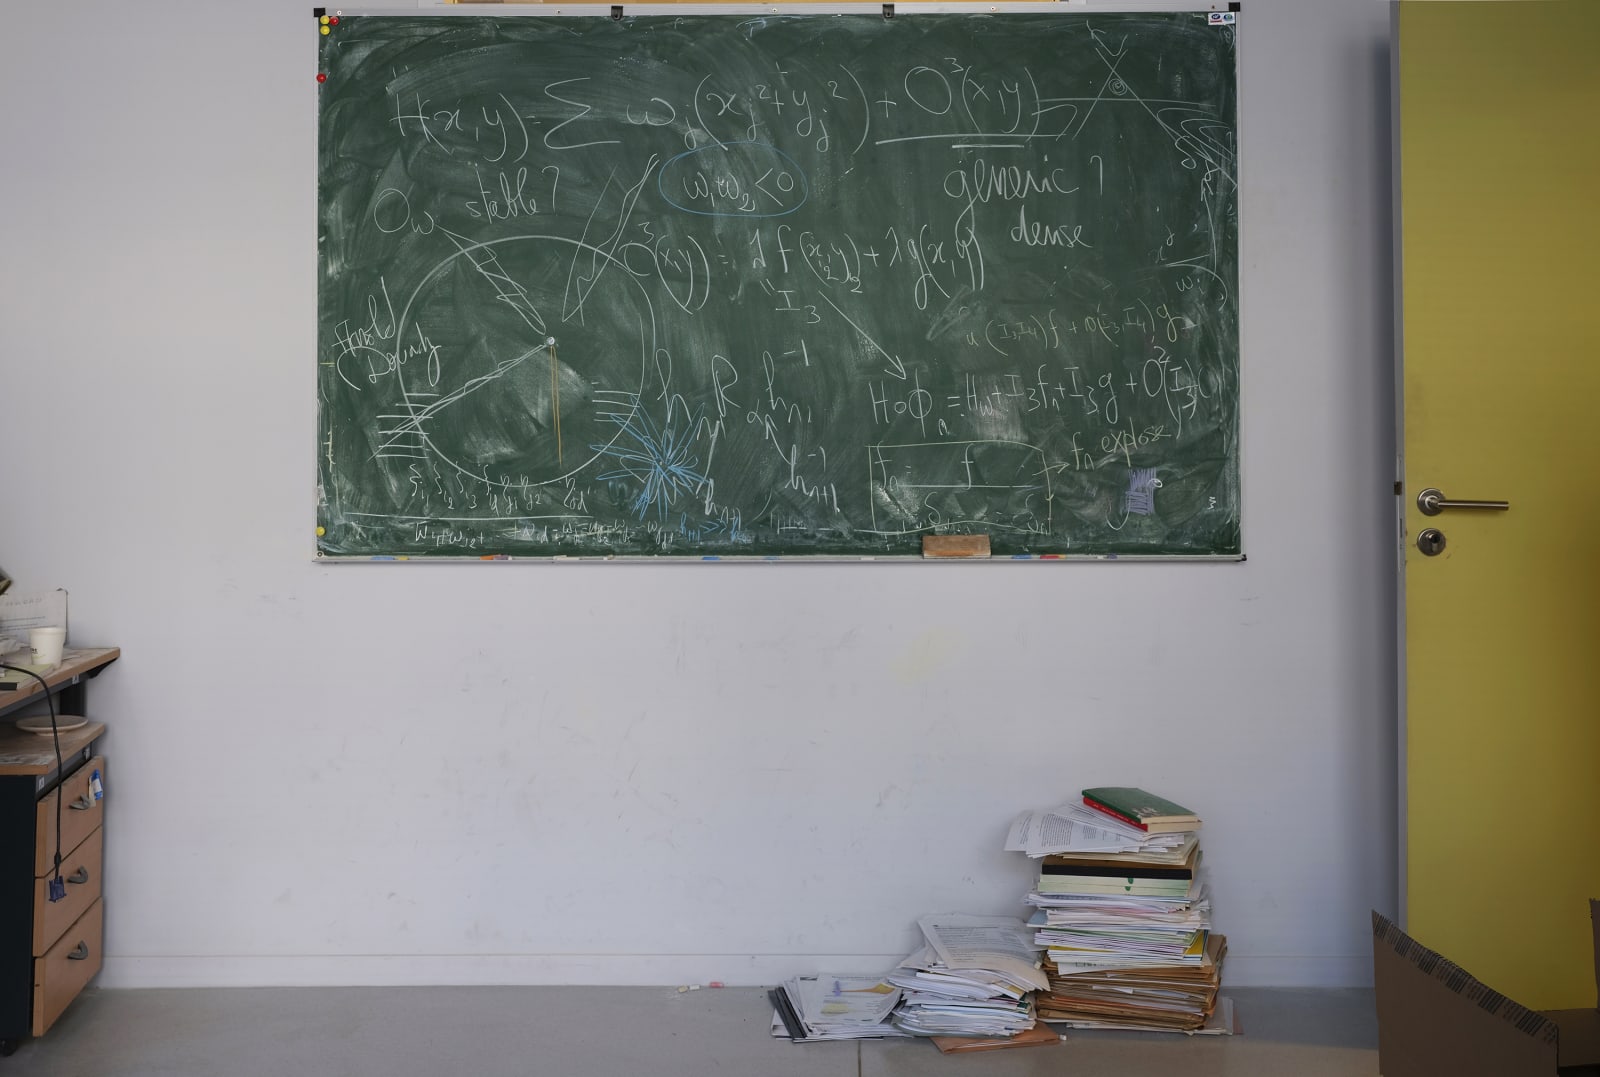 Green chalkboard in office of Professor Bassam Fayad, from the Do Not Erase series by Jessica Wynne